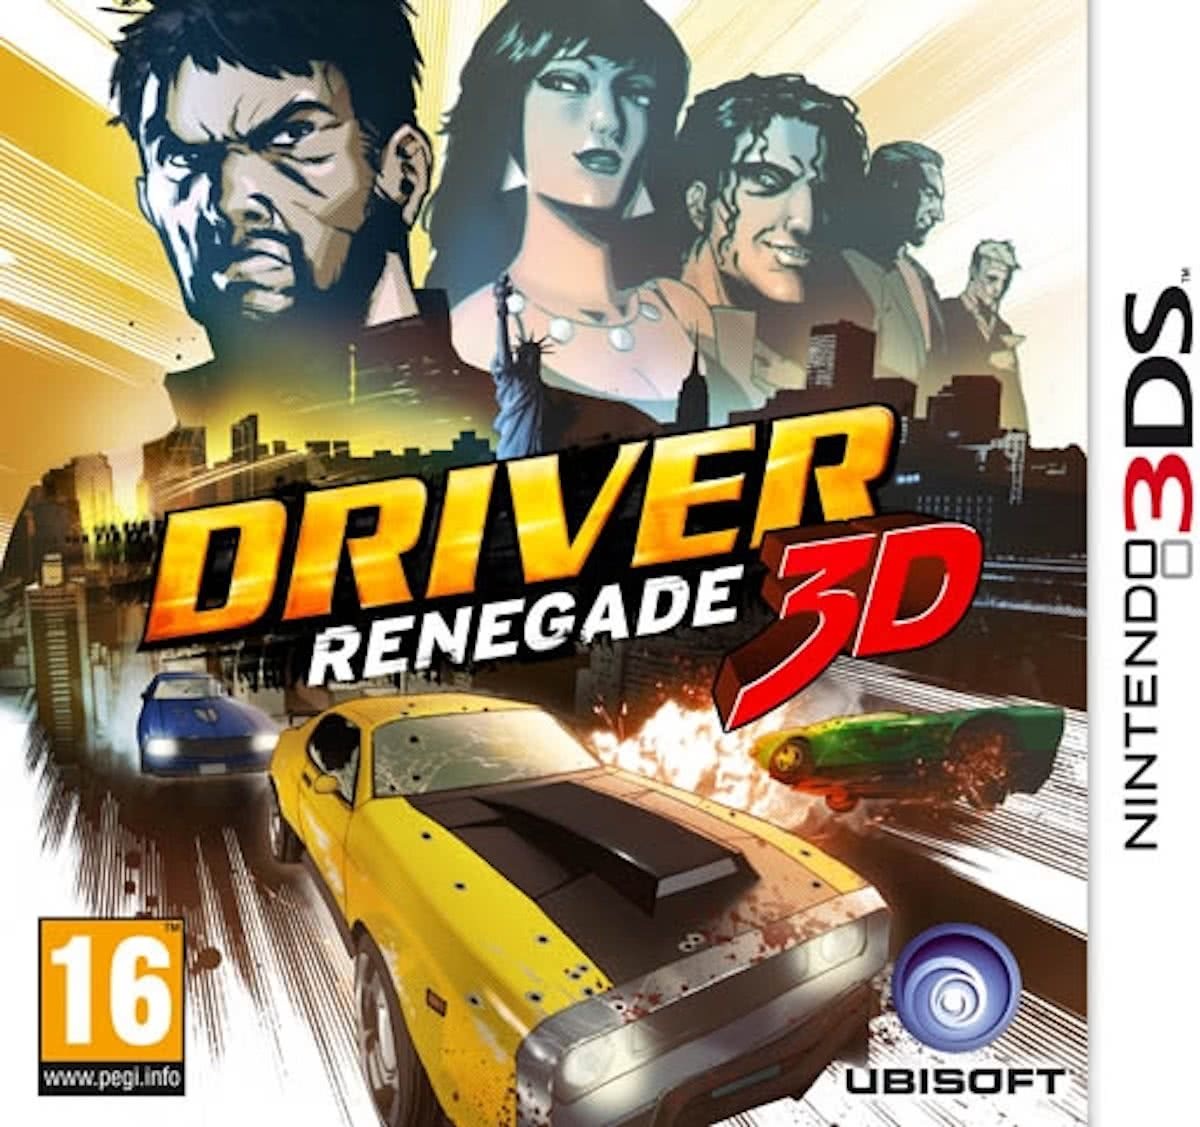 Ubisoft Driver: Renegade 3D